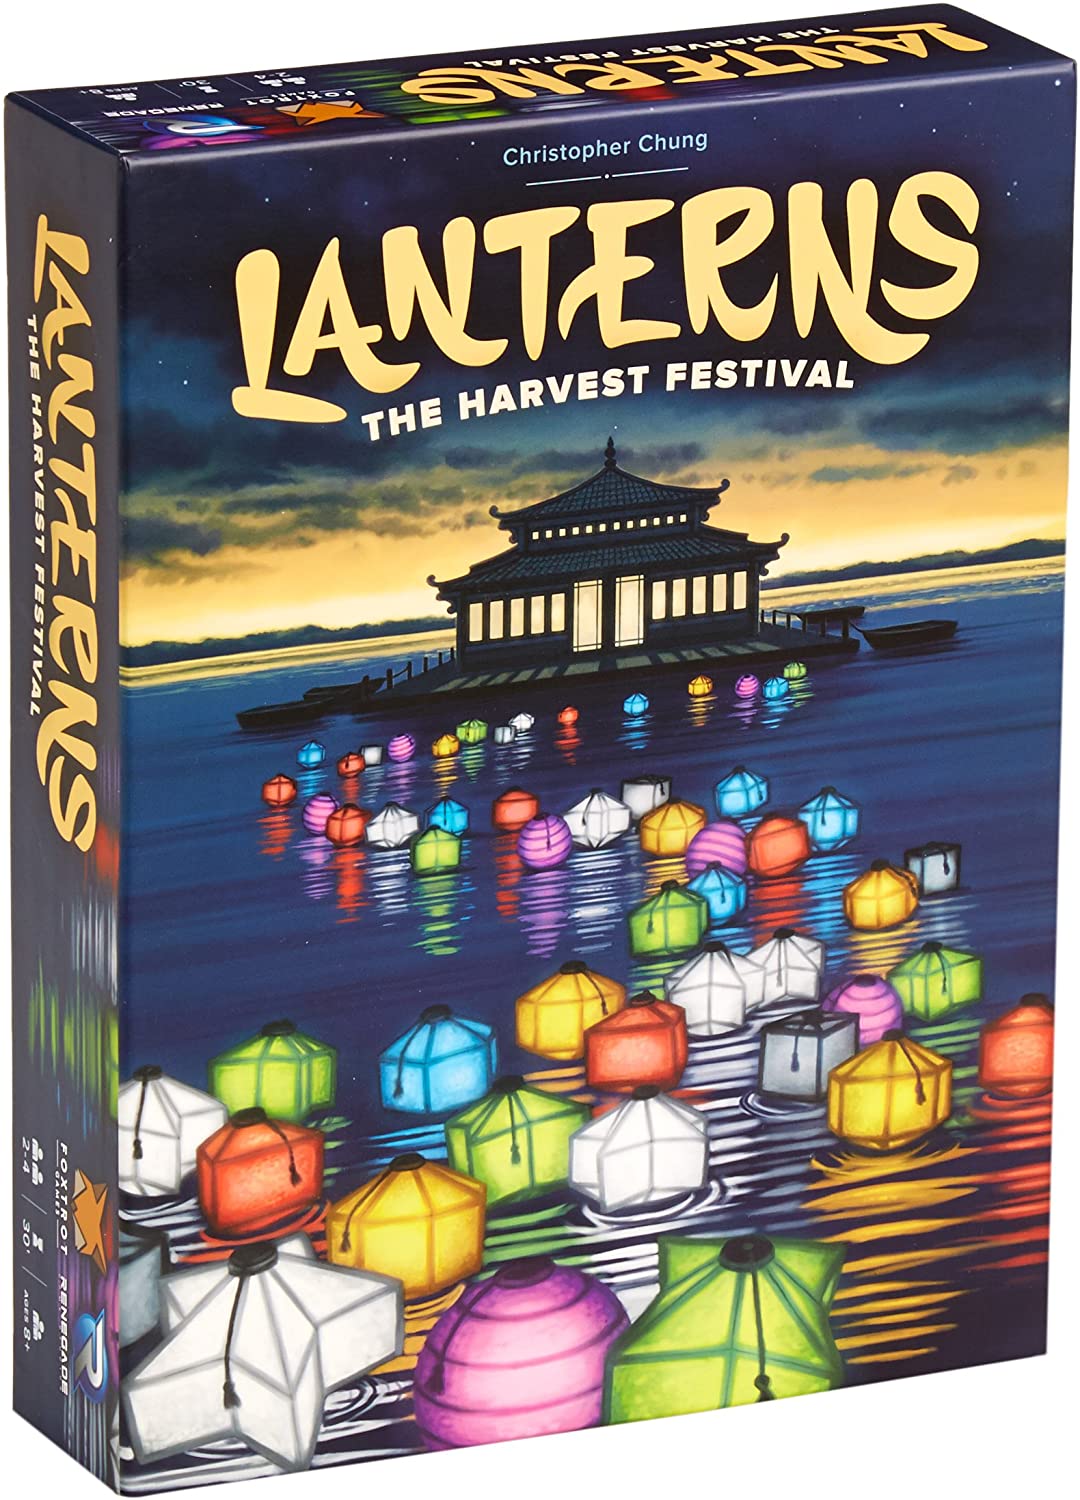 (BSG Certified USED) Lanterns: The Harvest Festival